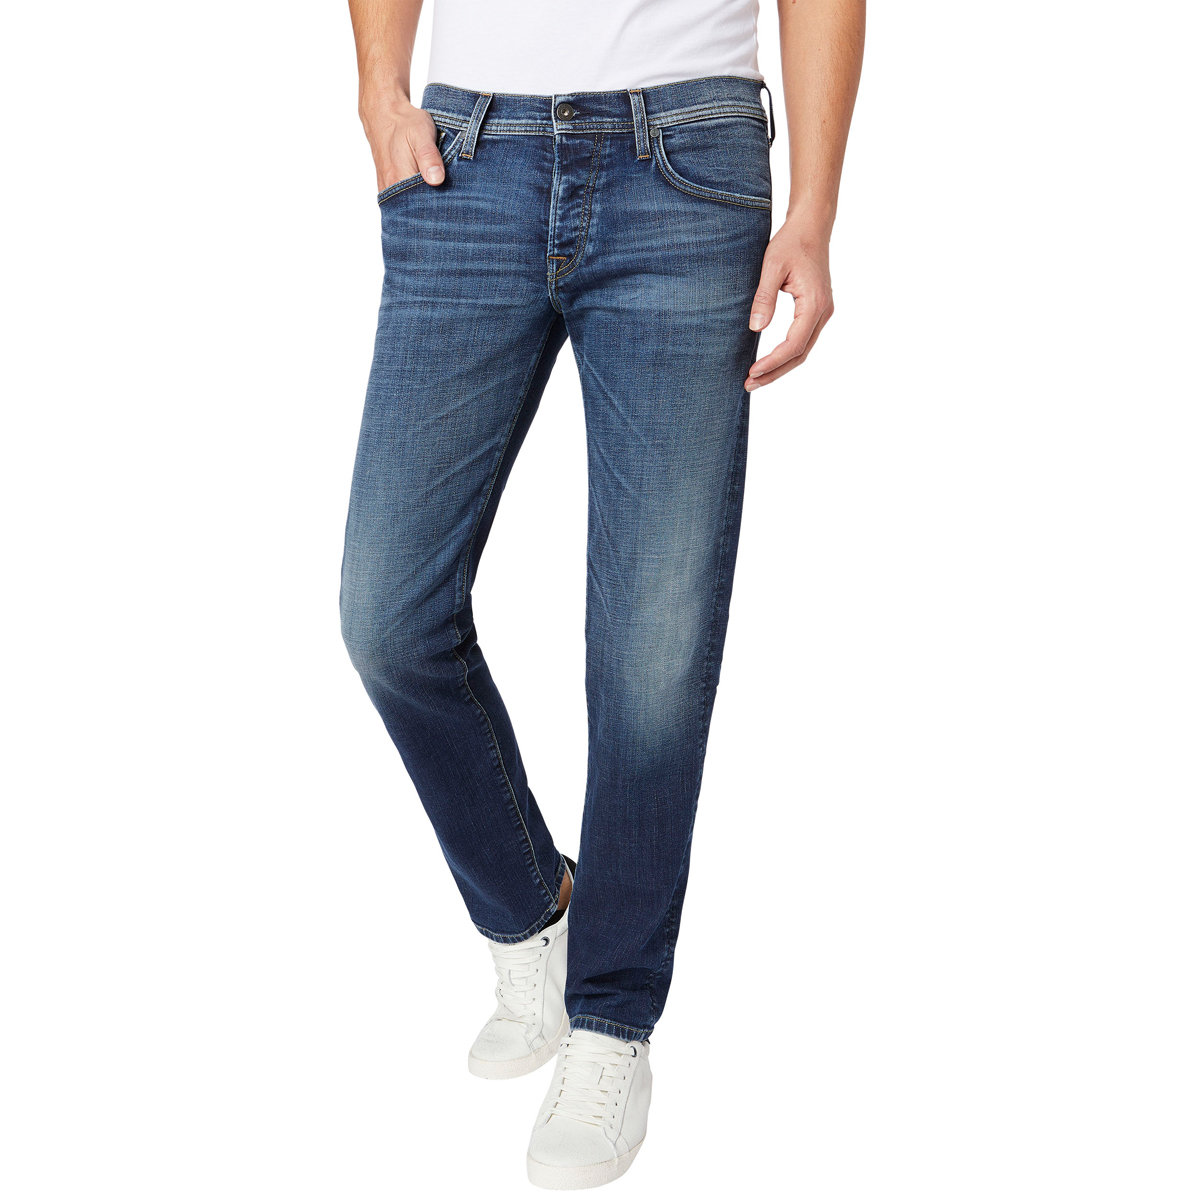 Джинсы мужские Pepe Jeans Cane, цвет: синий. 097.PM200072.GD1.000. Размер 30-34 (46-34)